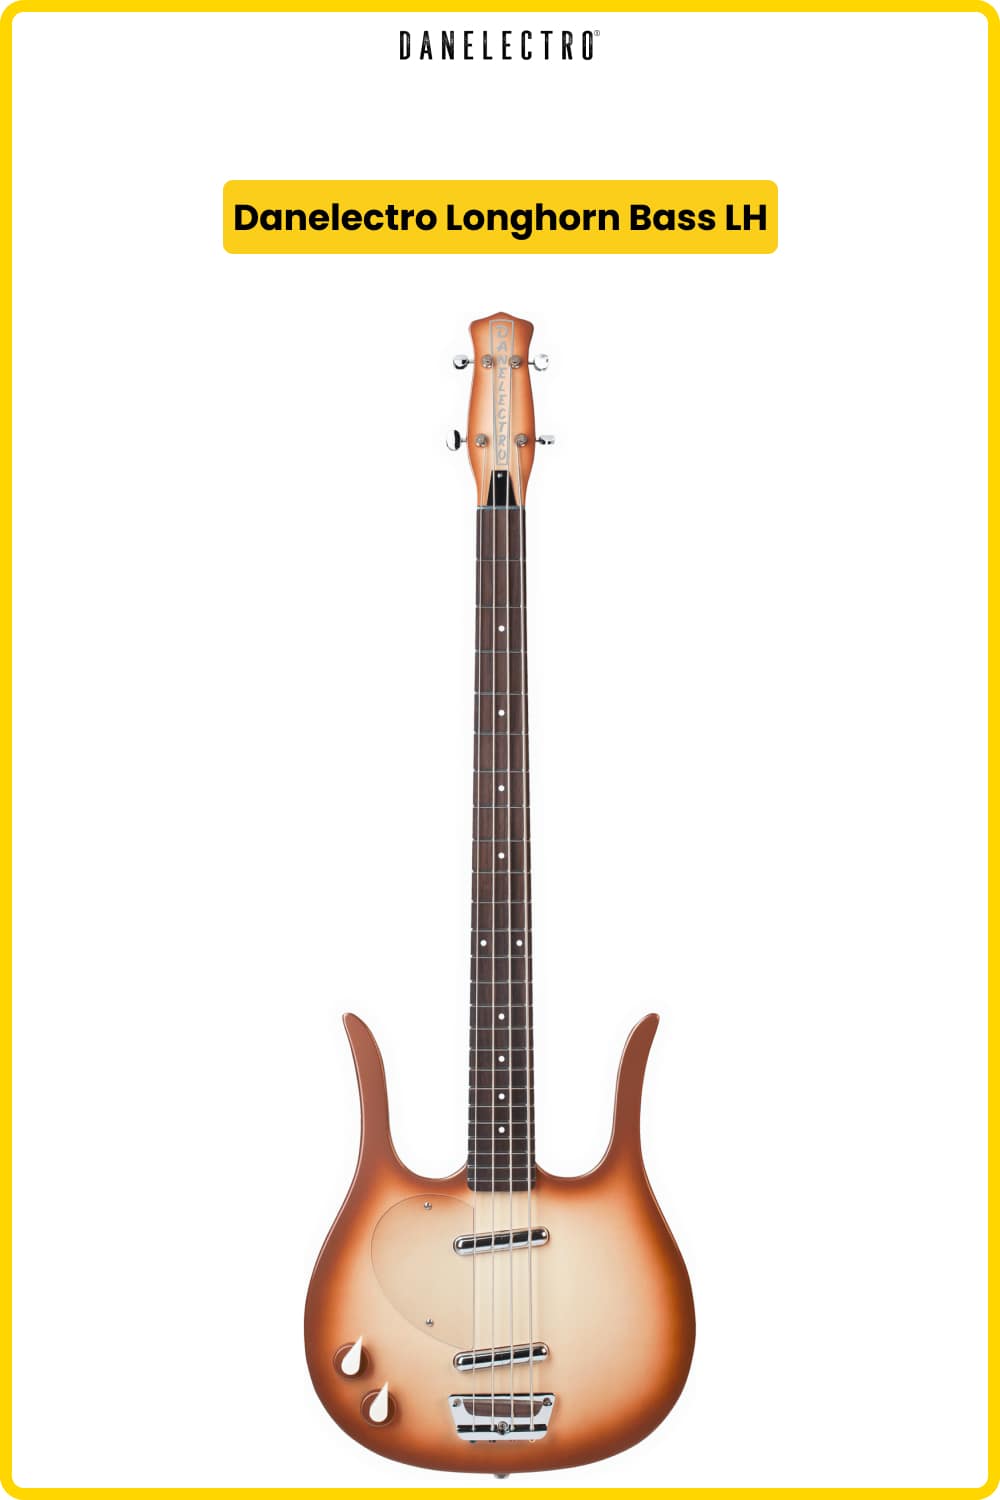 Left-Handed Bass Guitar Danelectro Longhorn Bass